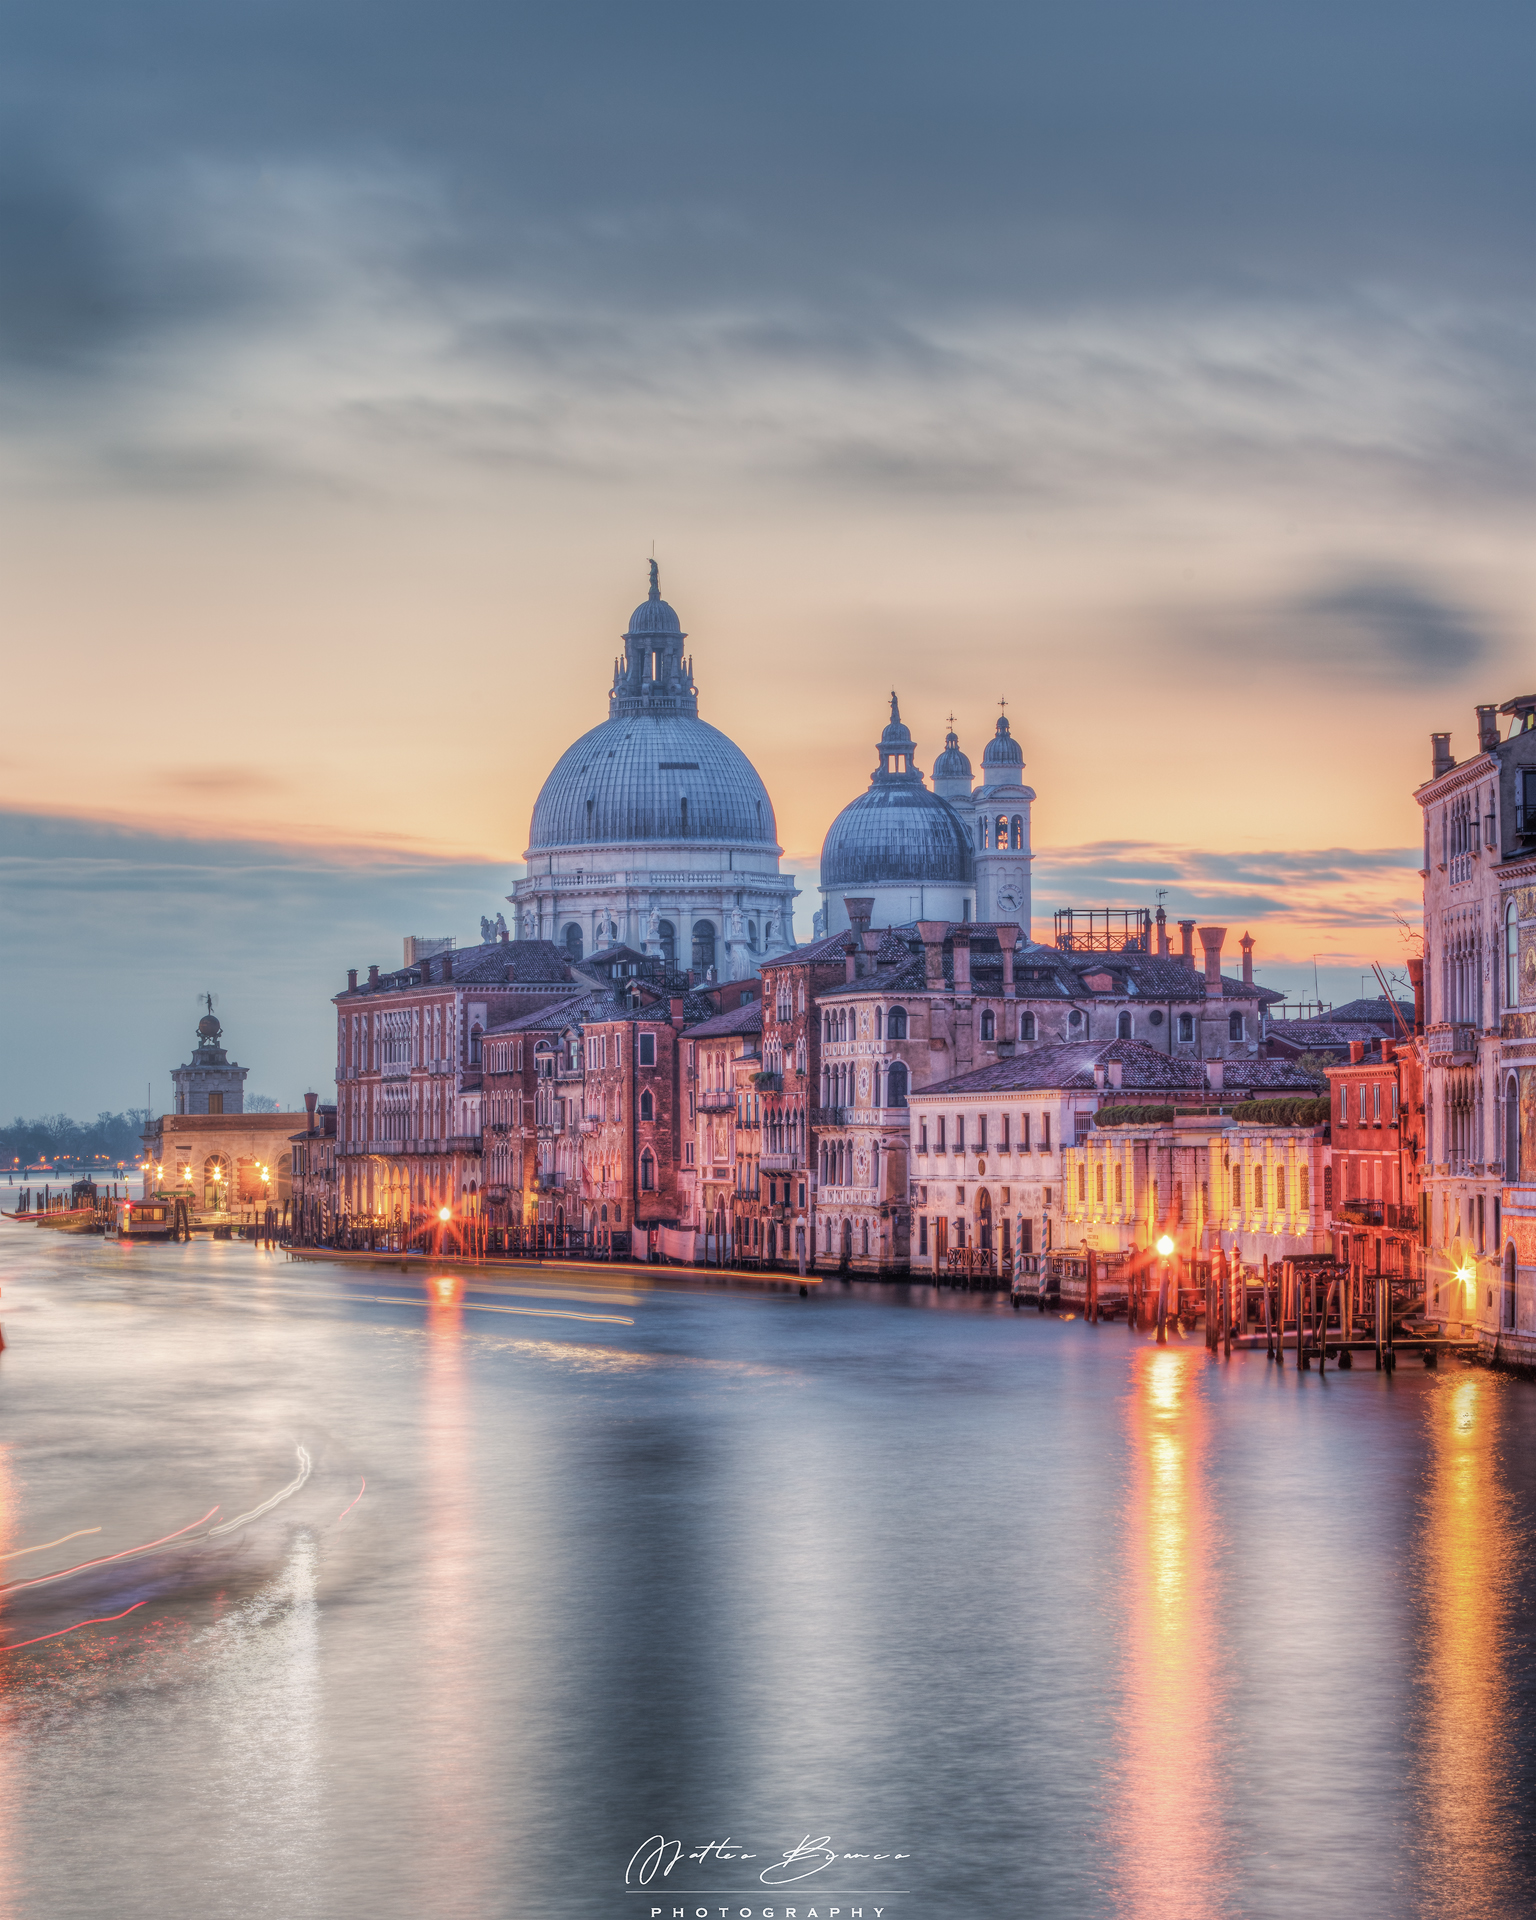 Venice at dawn from the Accademia bridge...